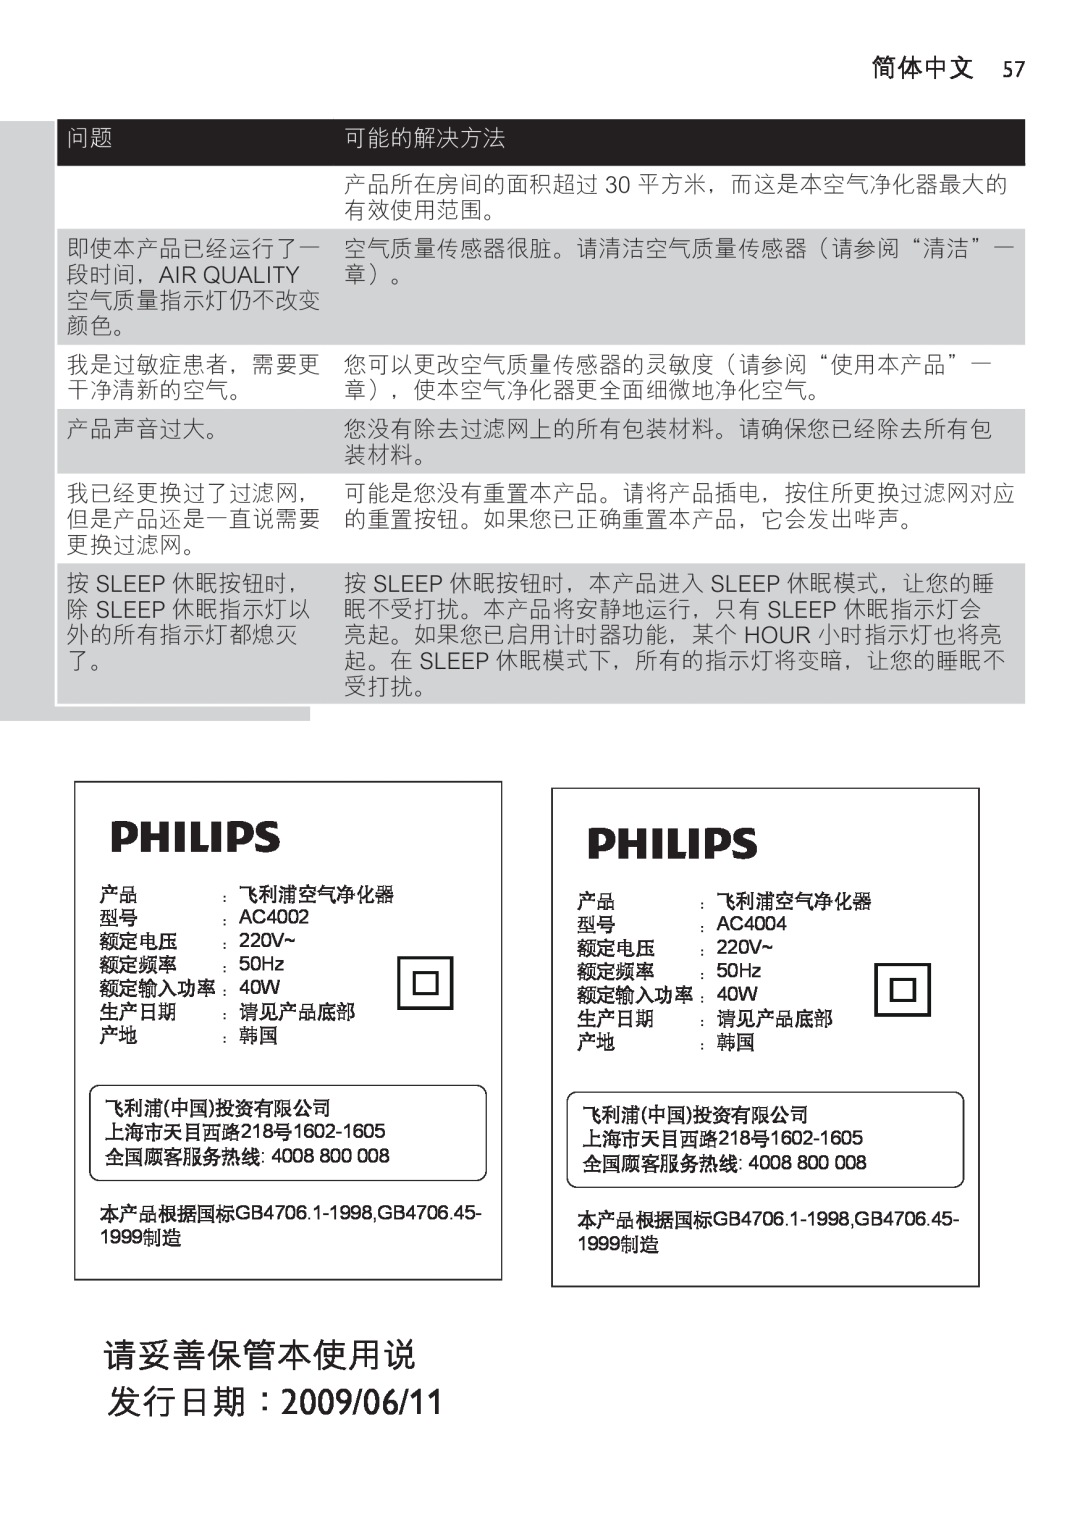 Philips AC4002 manual 2009/06/11, 简体中文, 可能的解决方法, 段时间，Air Quality 